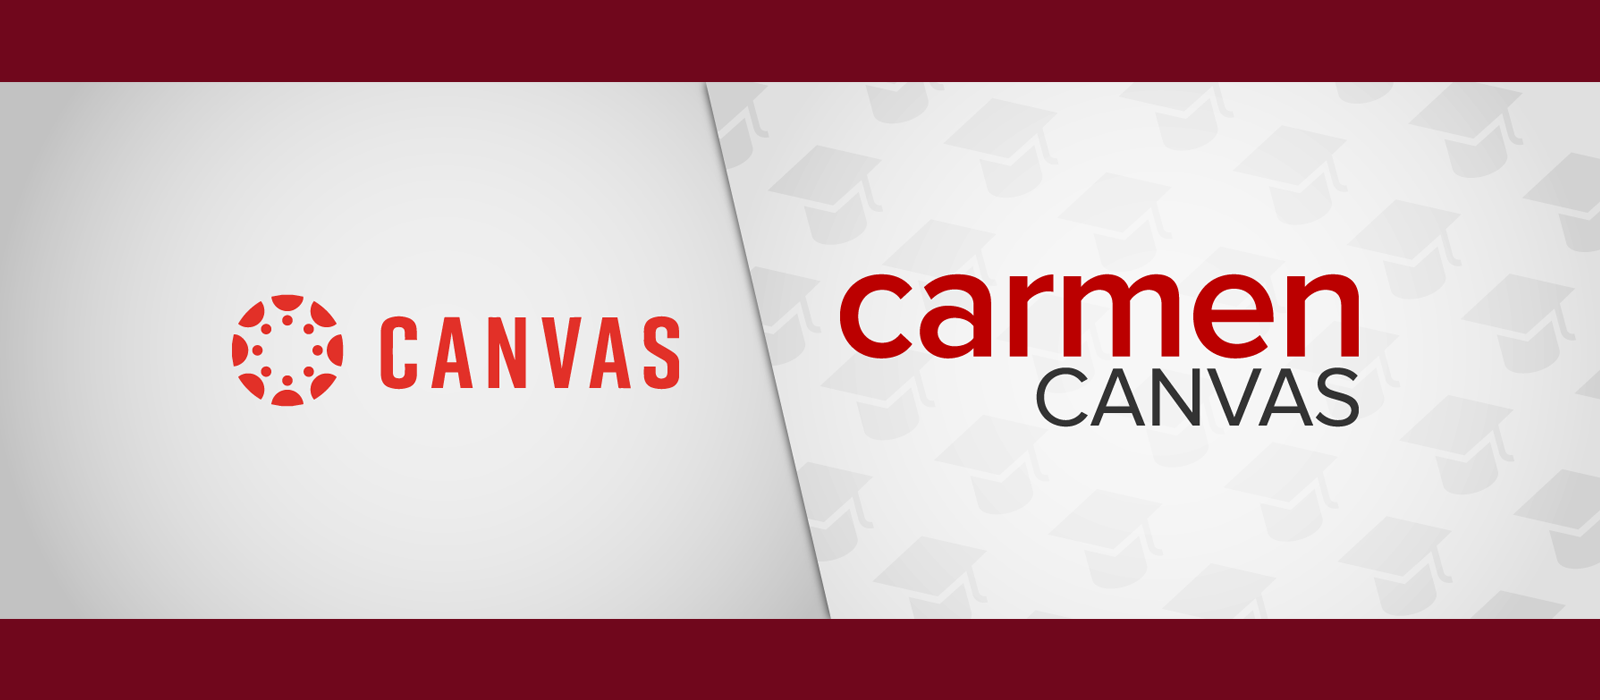 Canvas and Carmen Canvas